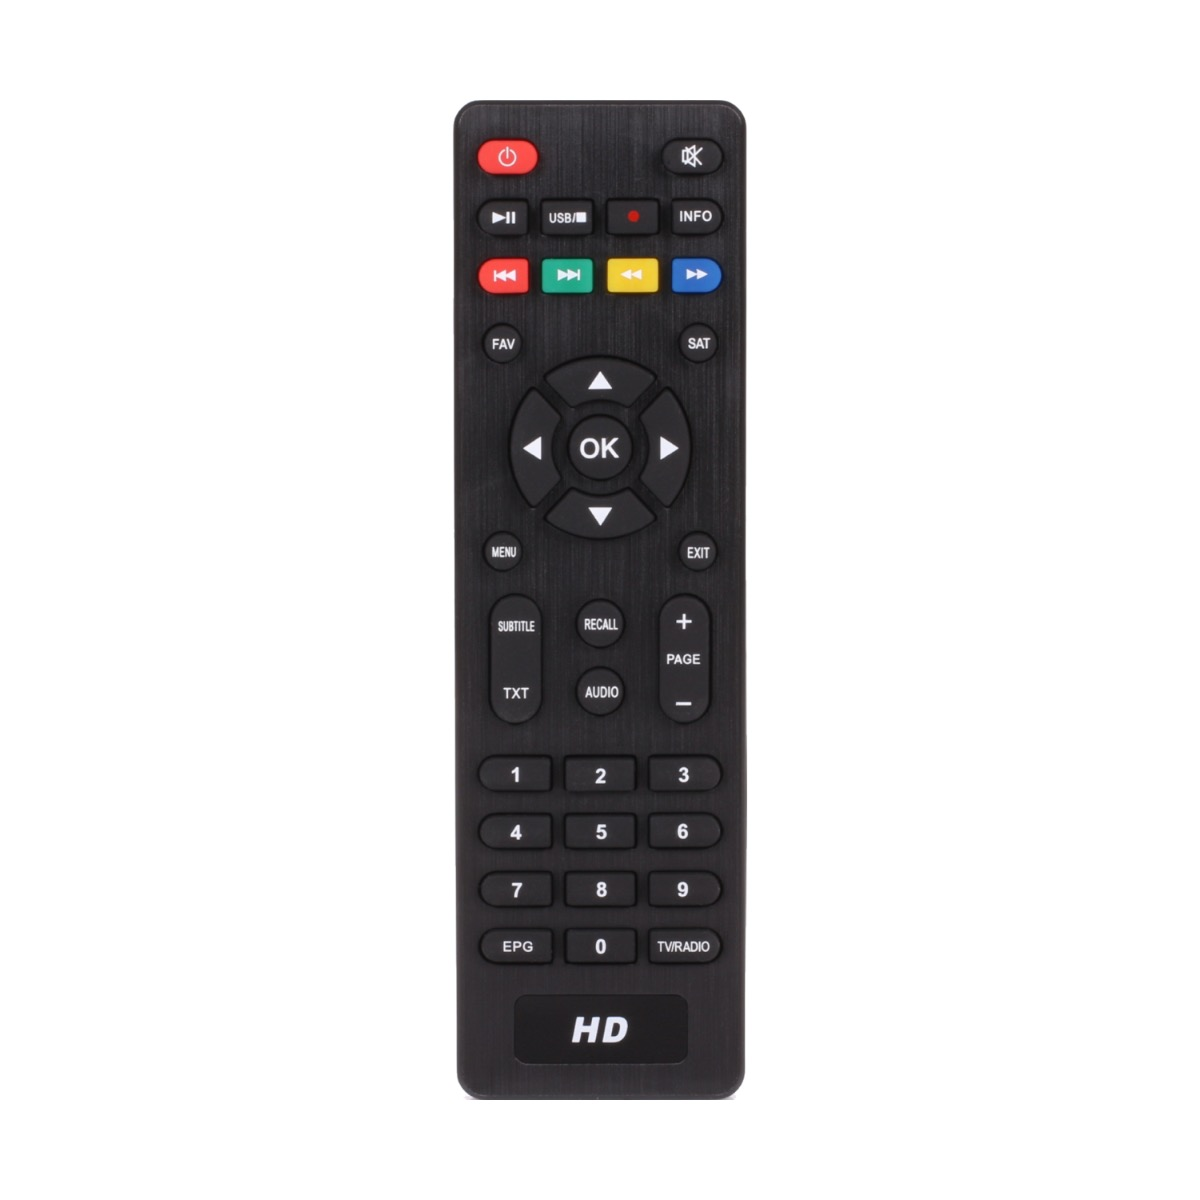 ANKARO (H.265), Sat Receiver, HD, Digitaler PVR, HDMI DSR DVB-T2 schwarz) Receiver 1080p (HDTV, Full DVB-S, DVB-C2, DVB-S2, 2100 PVR-Funktion, Satelliten mit DVB-S2, ANK